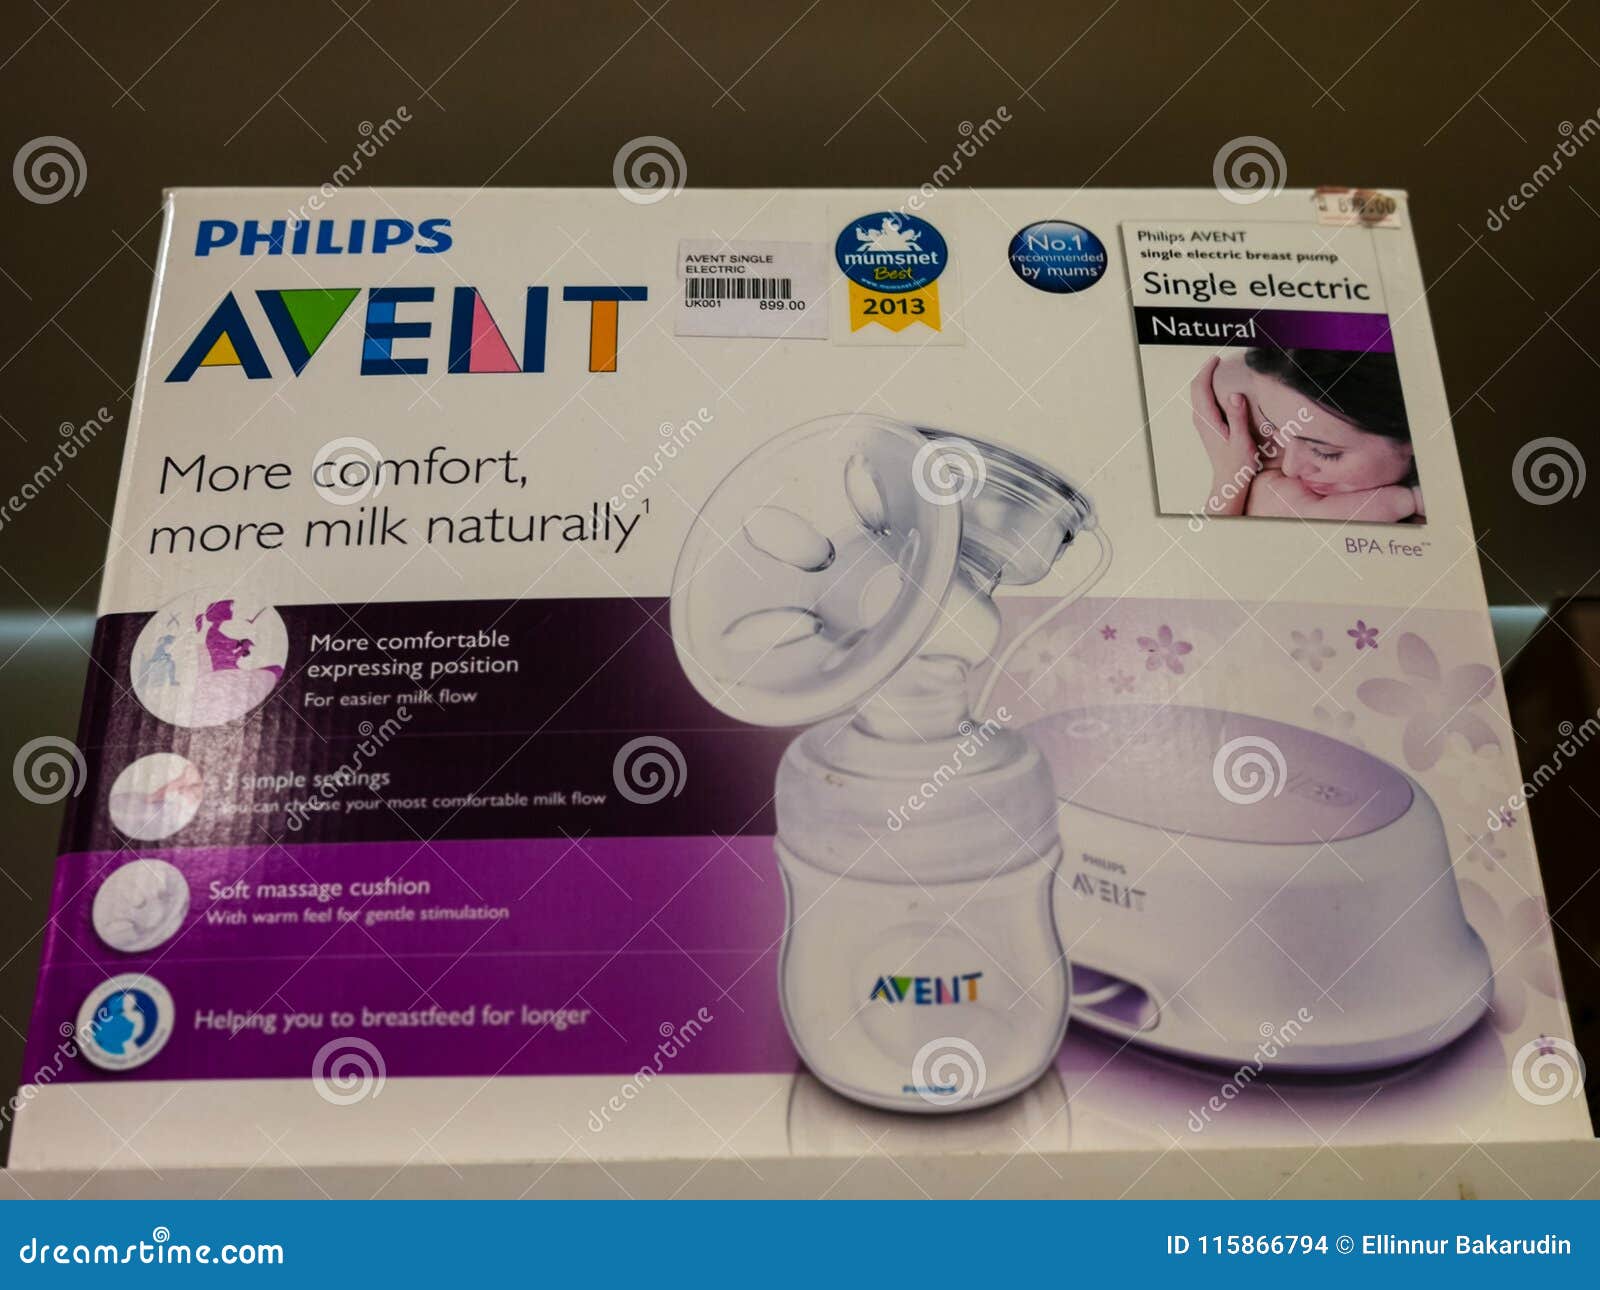 Avent Baby Products on Supermarket Shelves. Stock Image - Image of february, baby: 115866794